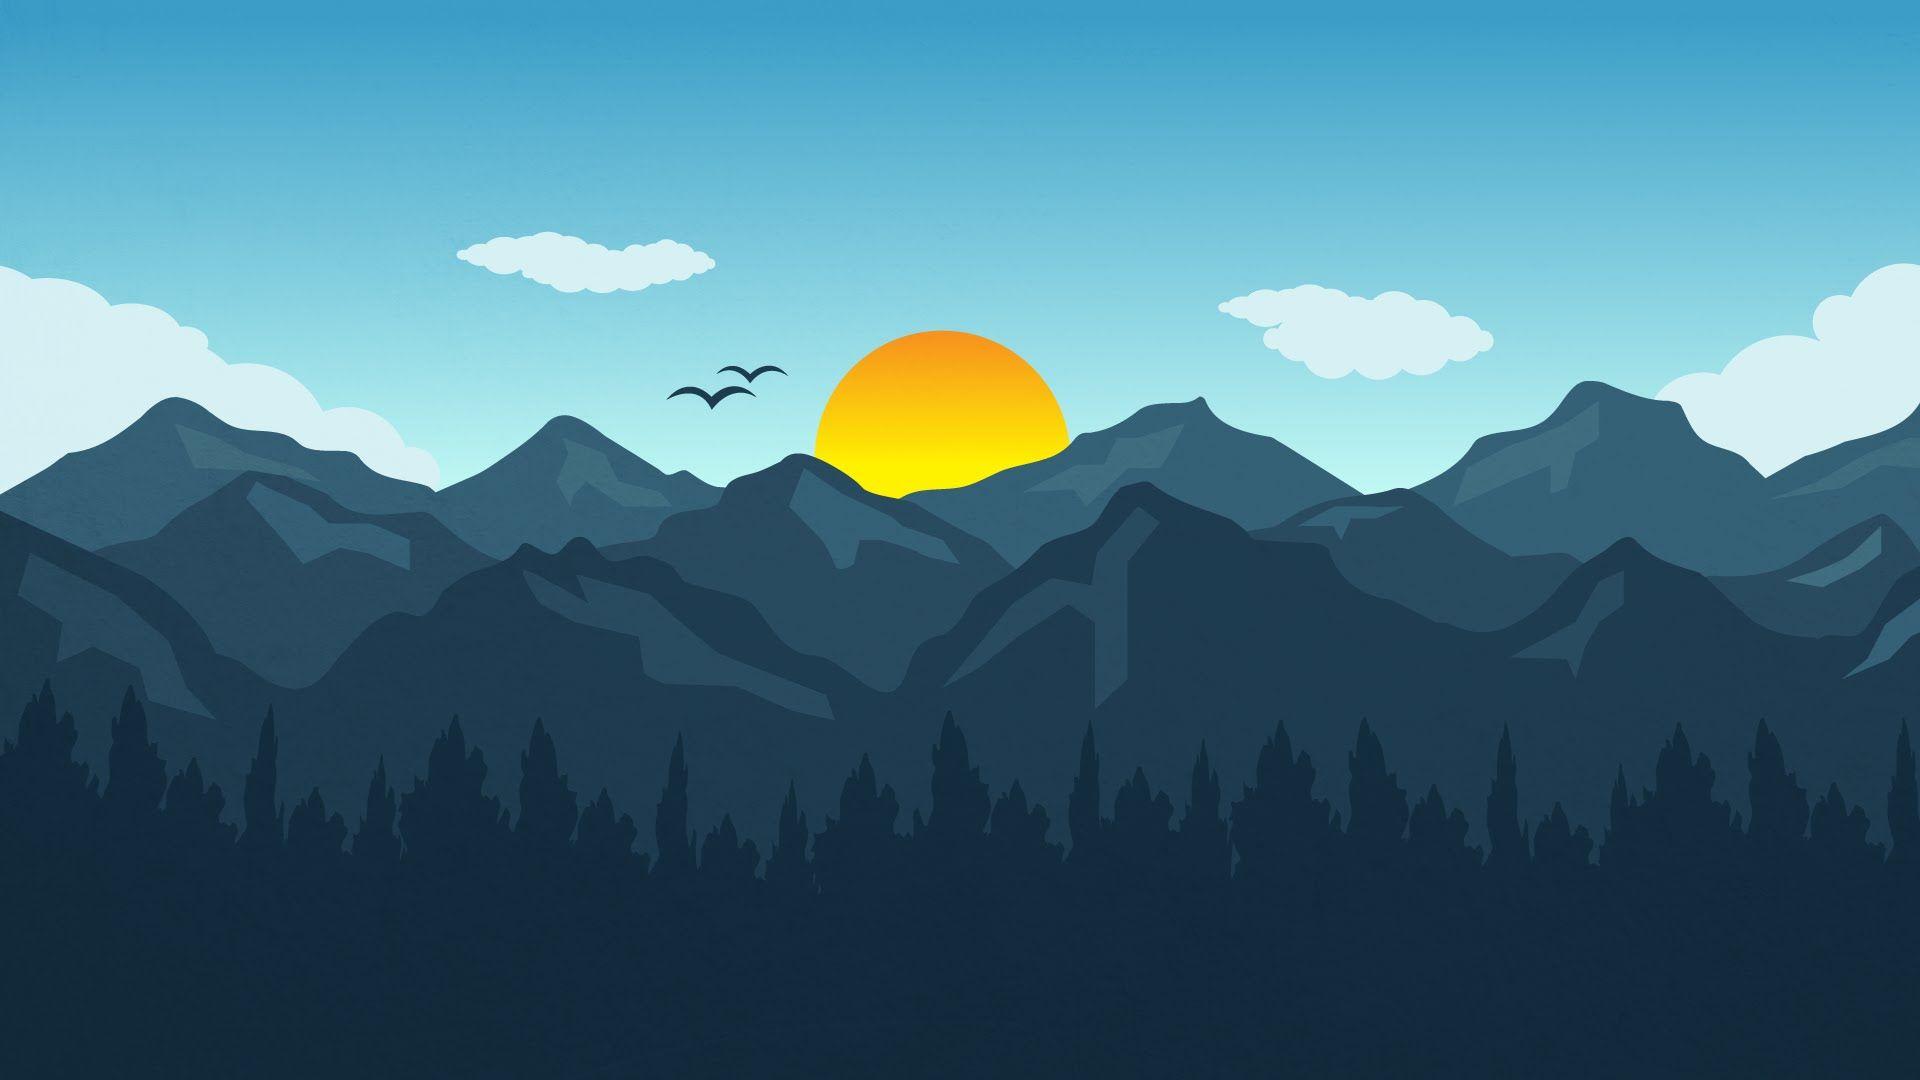 background illustrator free download